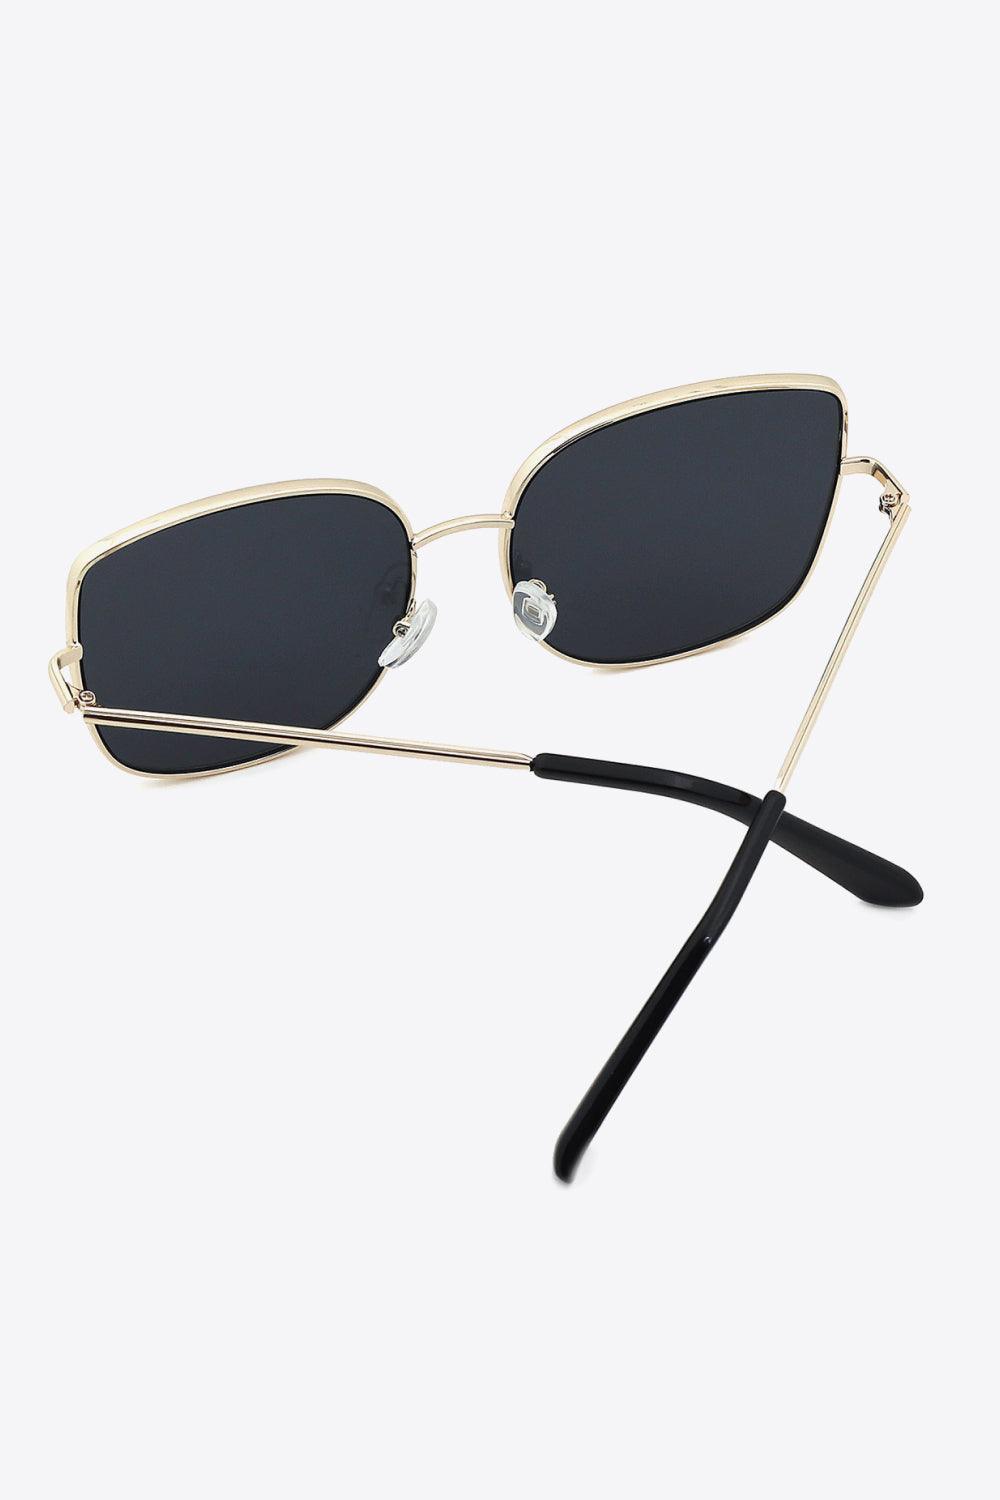 Metal Frame Black Wayfarer Acetate Sunglasses - MXSTUDIO.COM